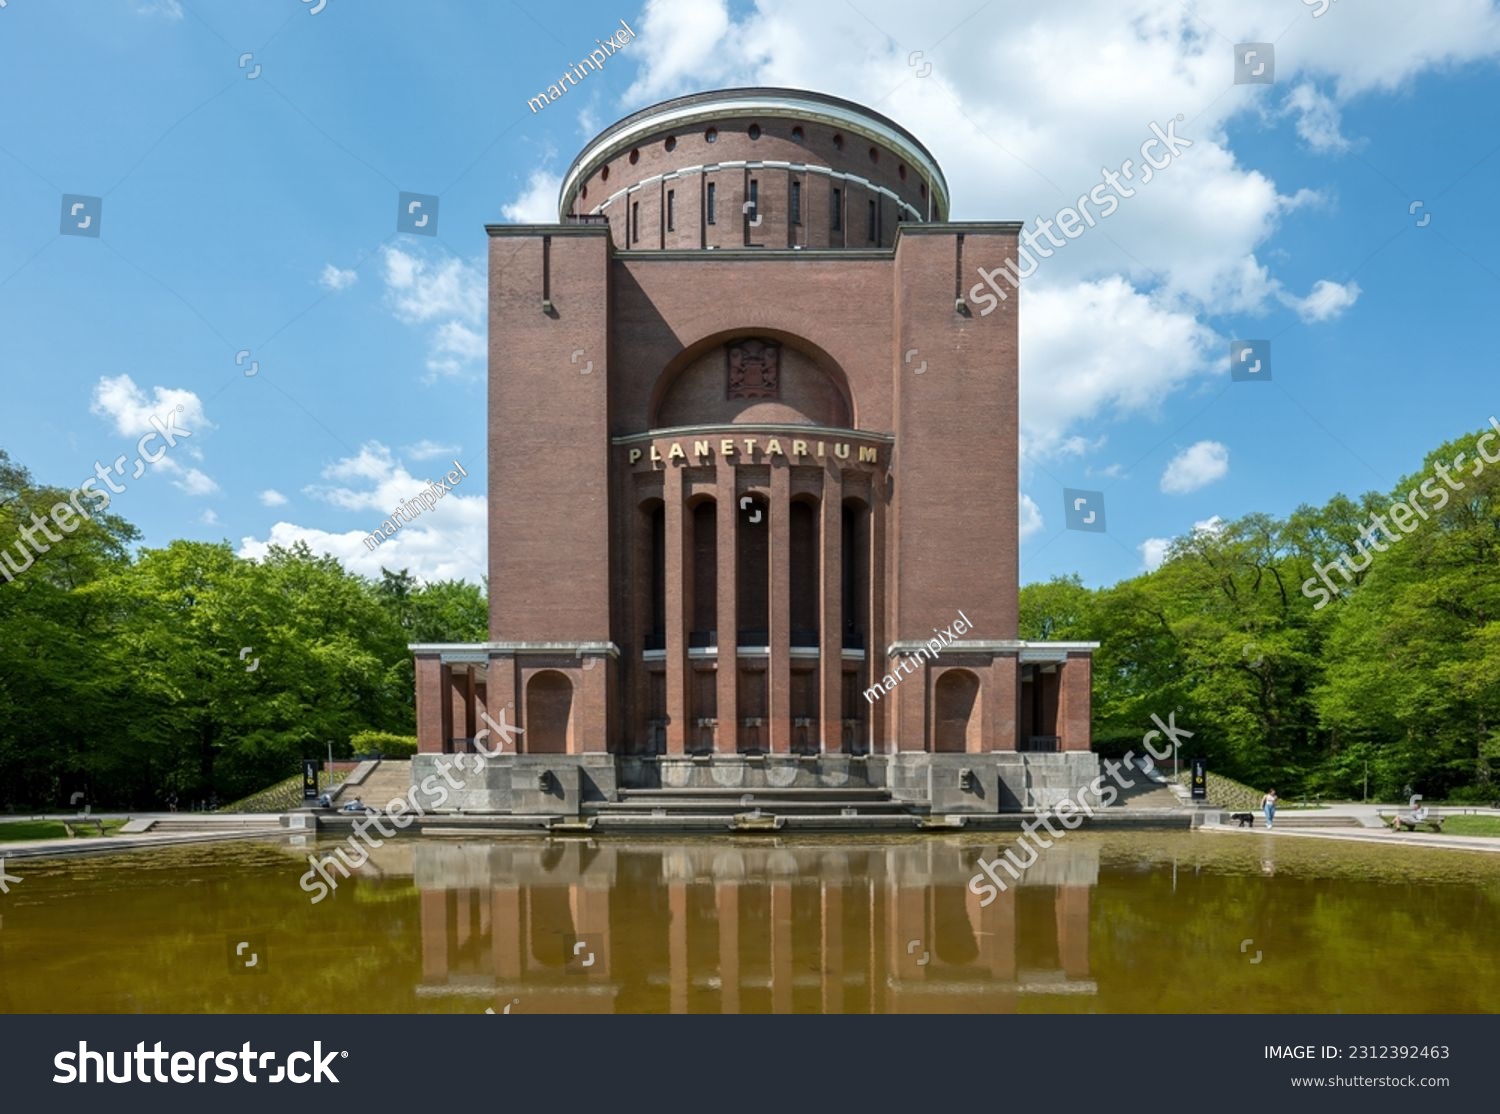 Planetarium (clinker building) in Hamburg, Germany #2312392463